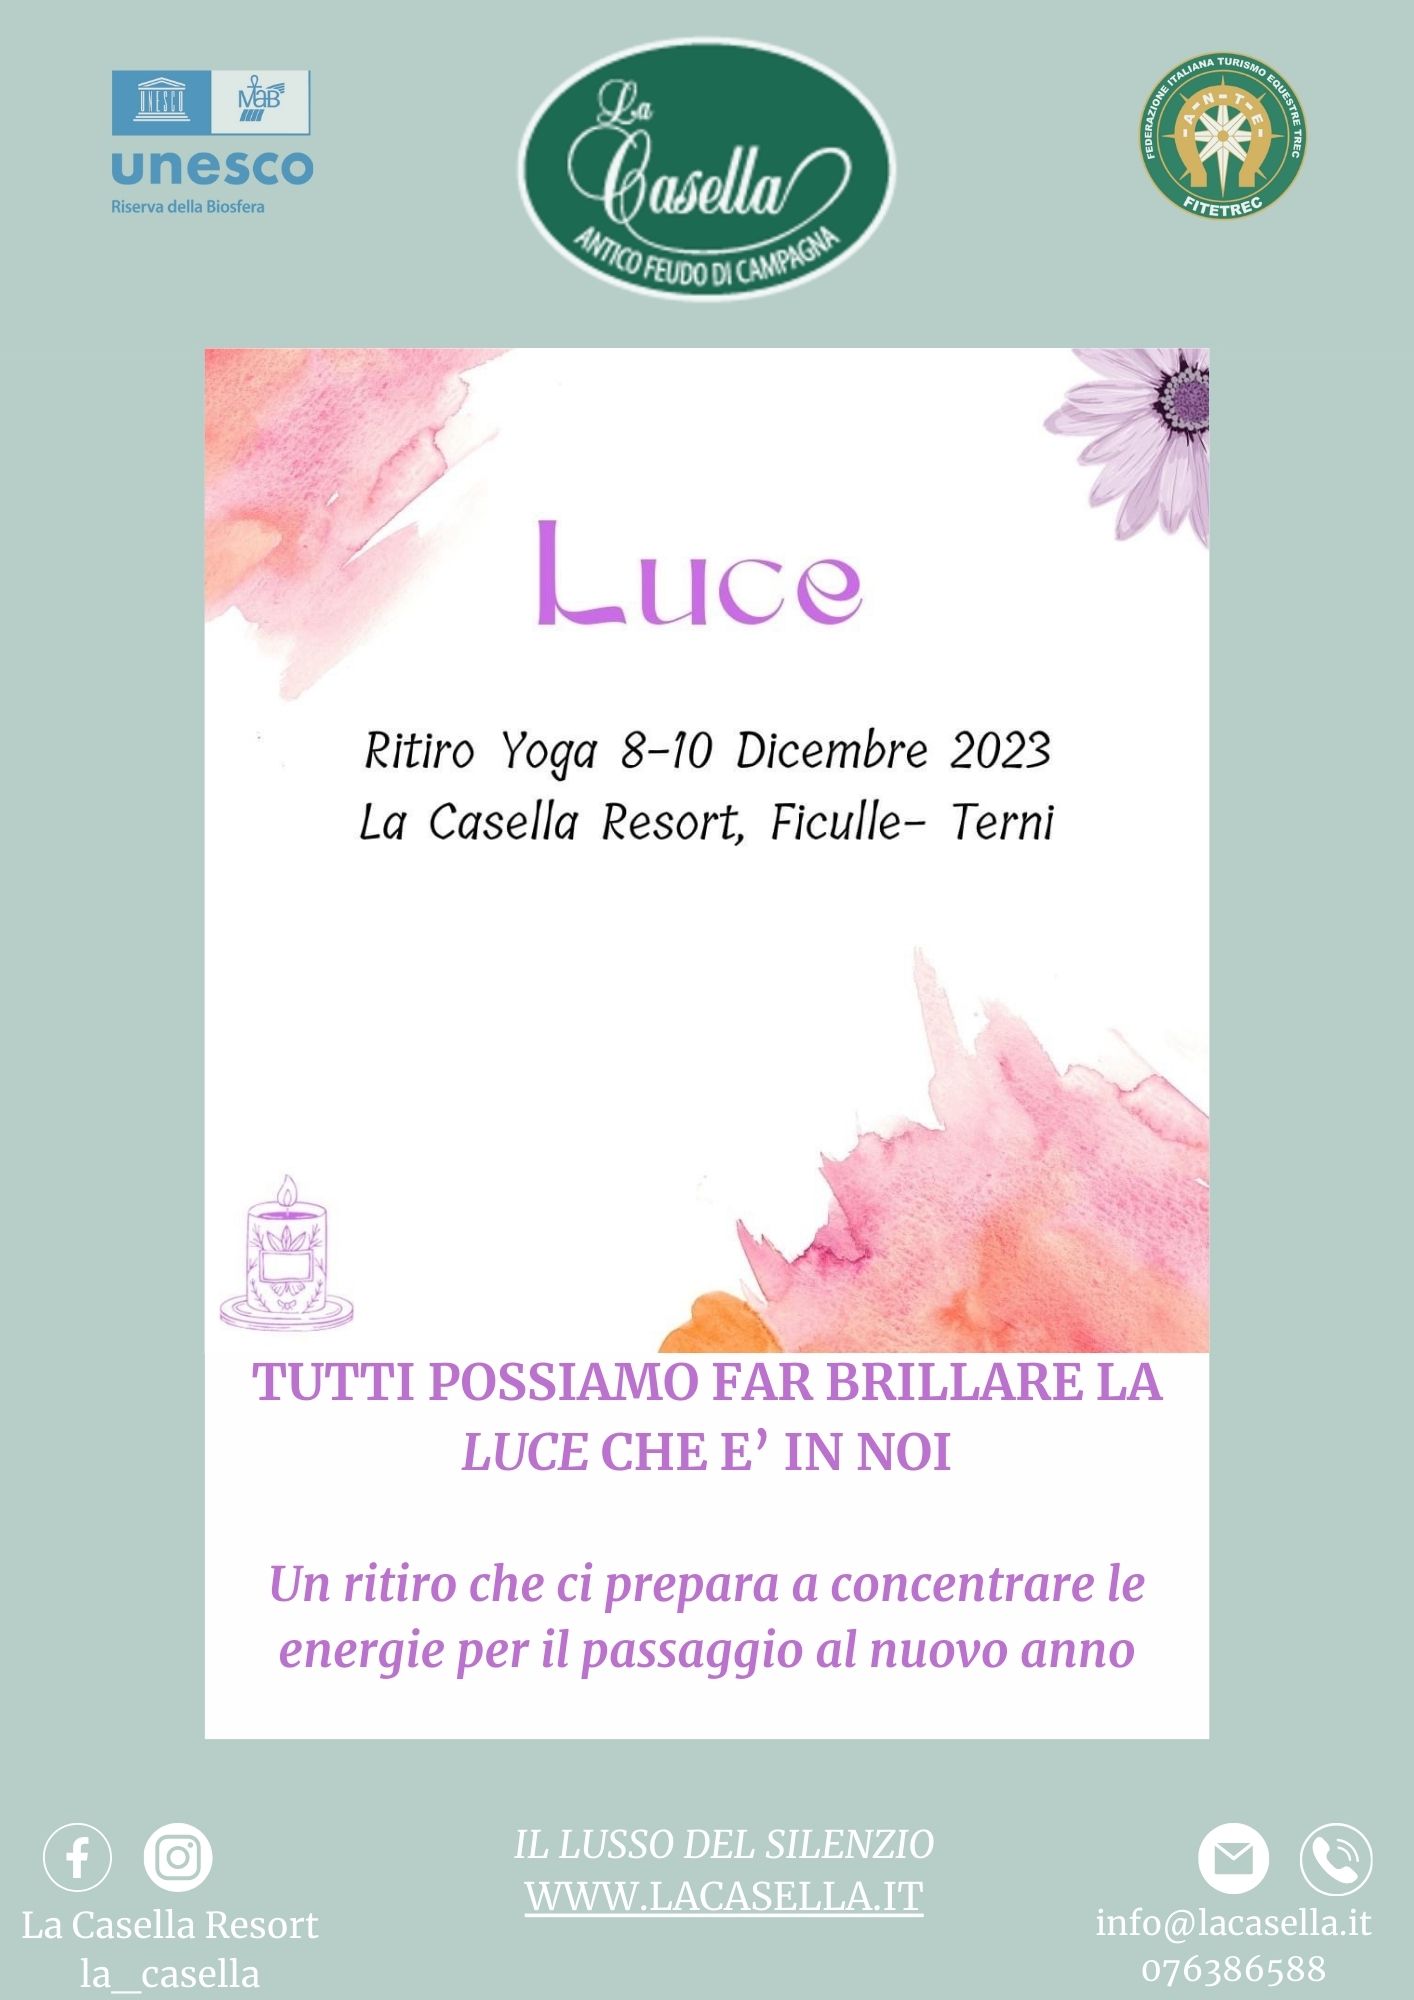 LUCE- ritiro yoga 8-10 dicembre 2023 con Adele e Simona - Zzf5i5tU4gc5